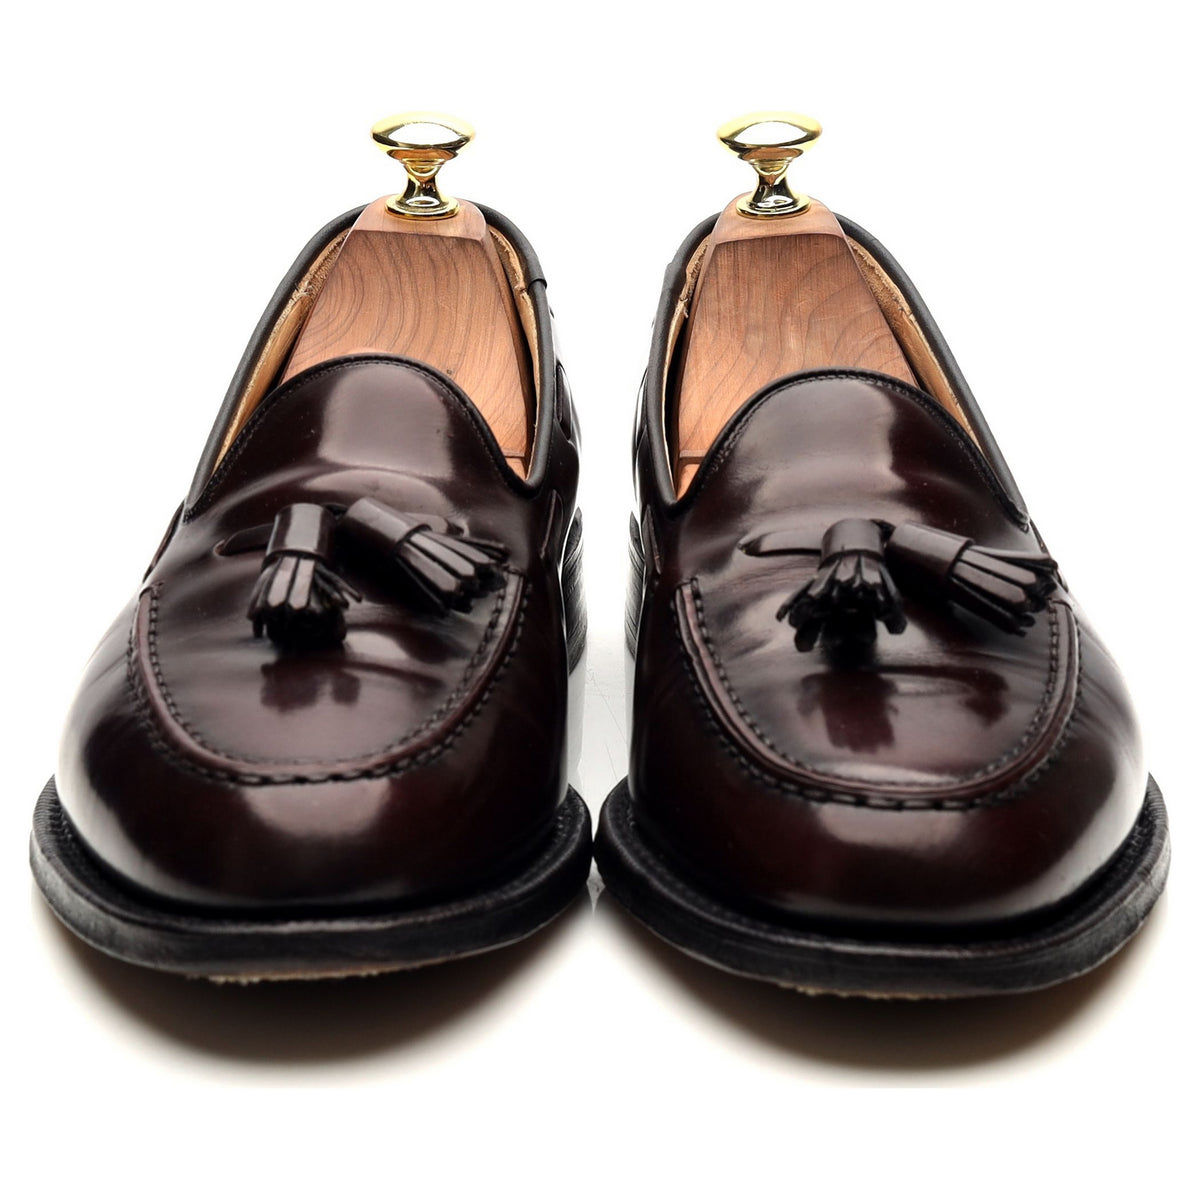 Keats II' Burgundy Leather Tassel Loafers UK 8 F - Abbot's Shoes